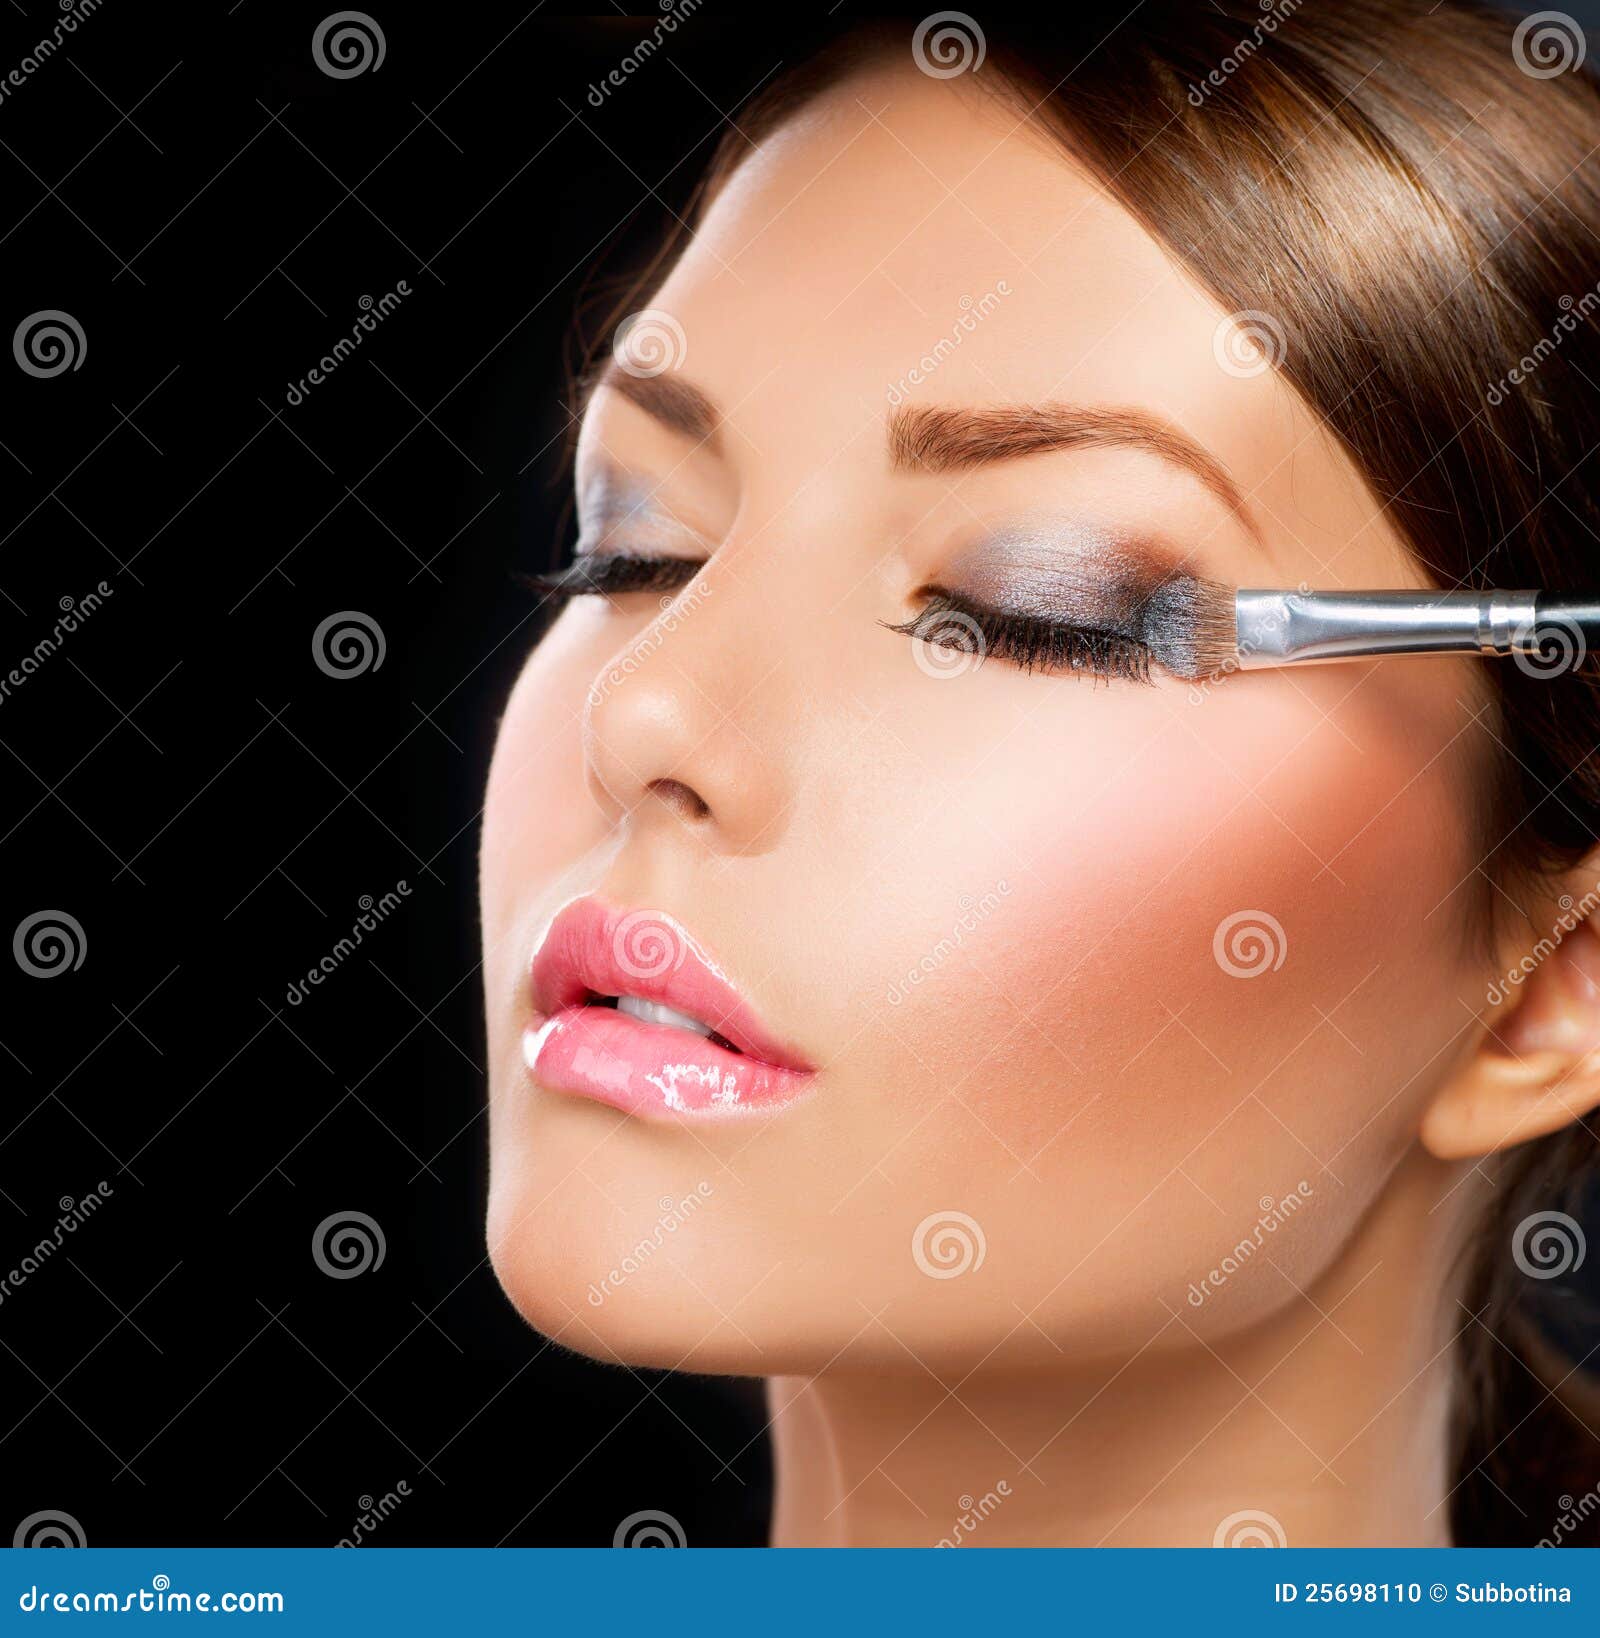 make-up. eye shadow brush